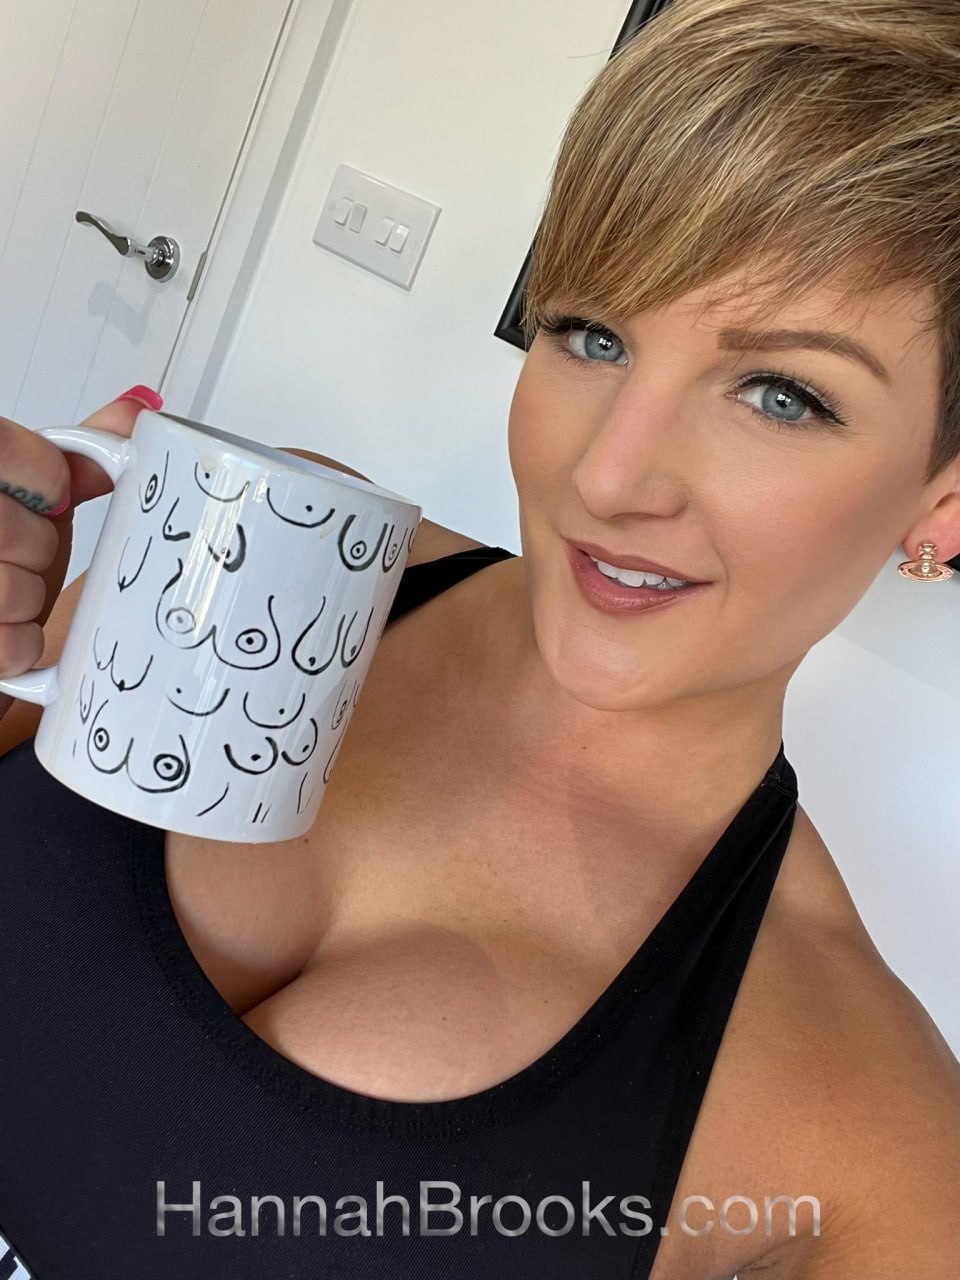 Hannah Brooks on X: The perfect mug for a titty Tuesday 😅 I hope